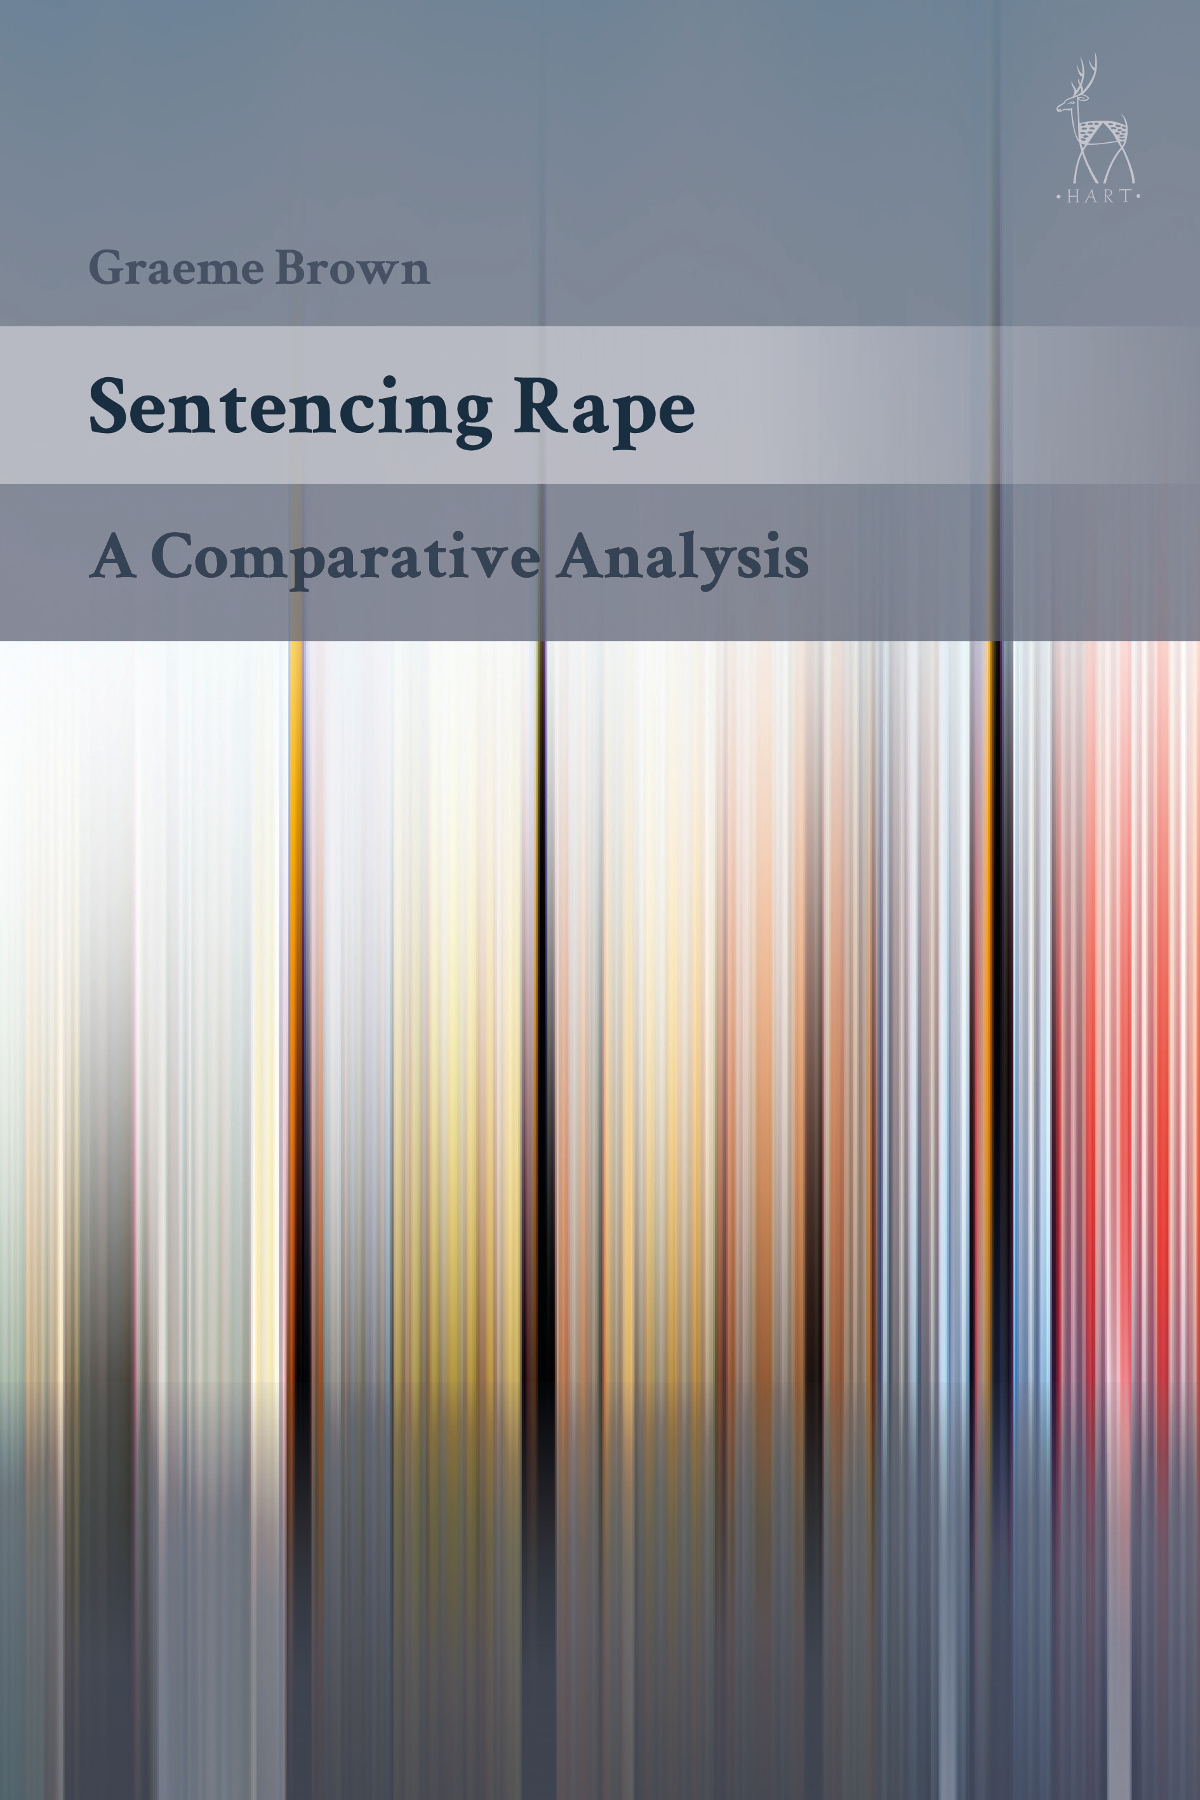 New book presents in-depth study of sentencing practice for rape in six jurisdictions